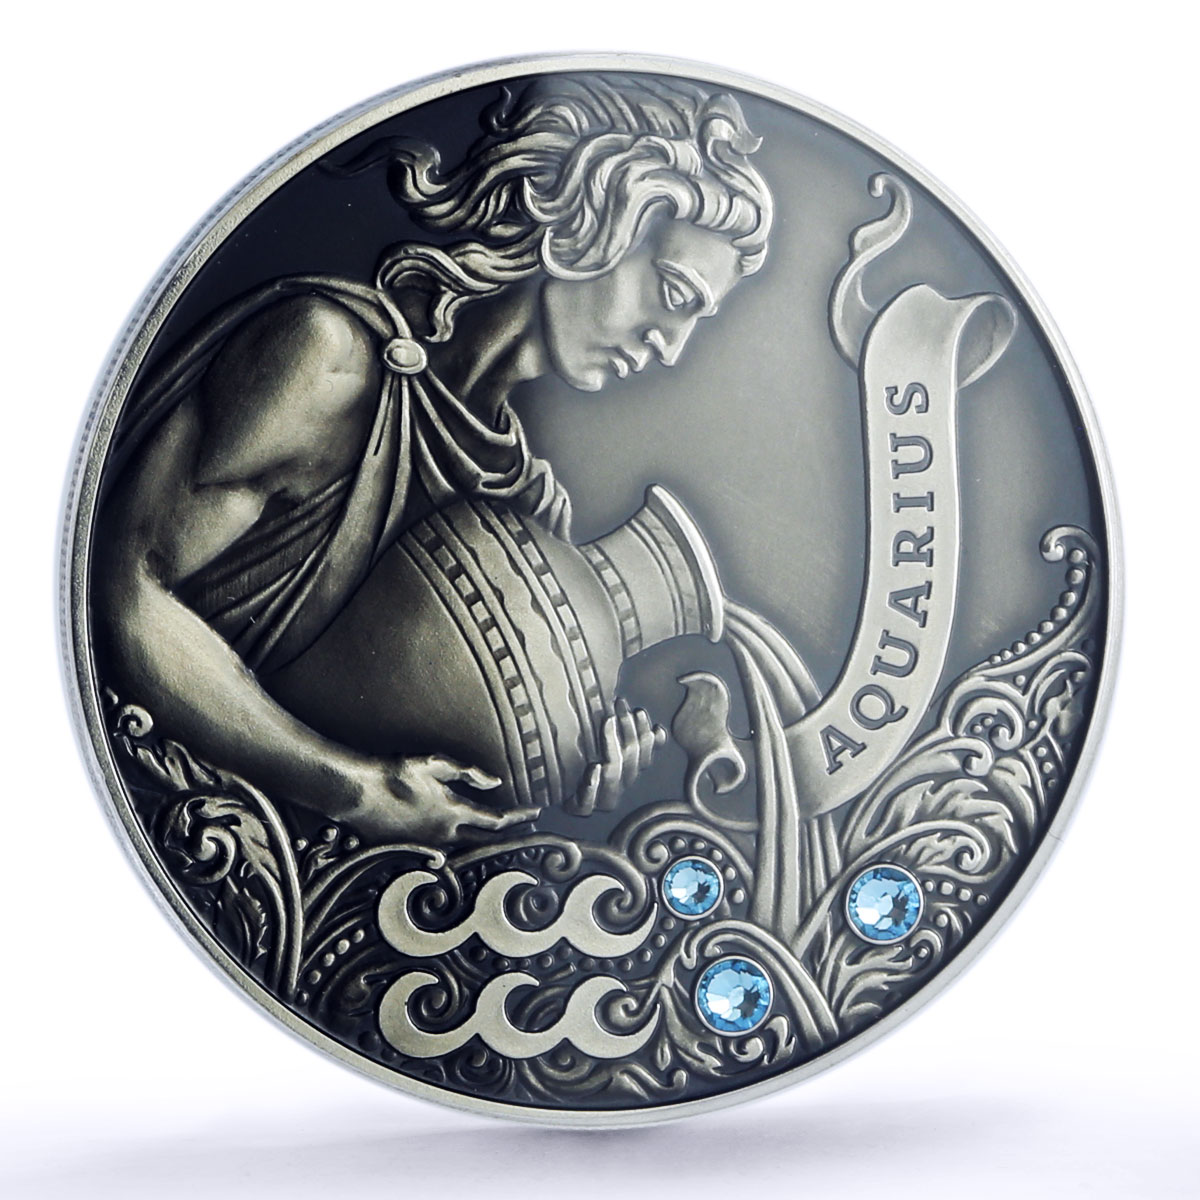 Belarus 20 rubles Zodiac Signs series Aquarius MS70 PCGS silver coin 2013